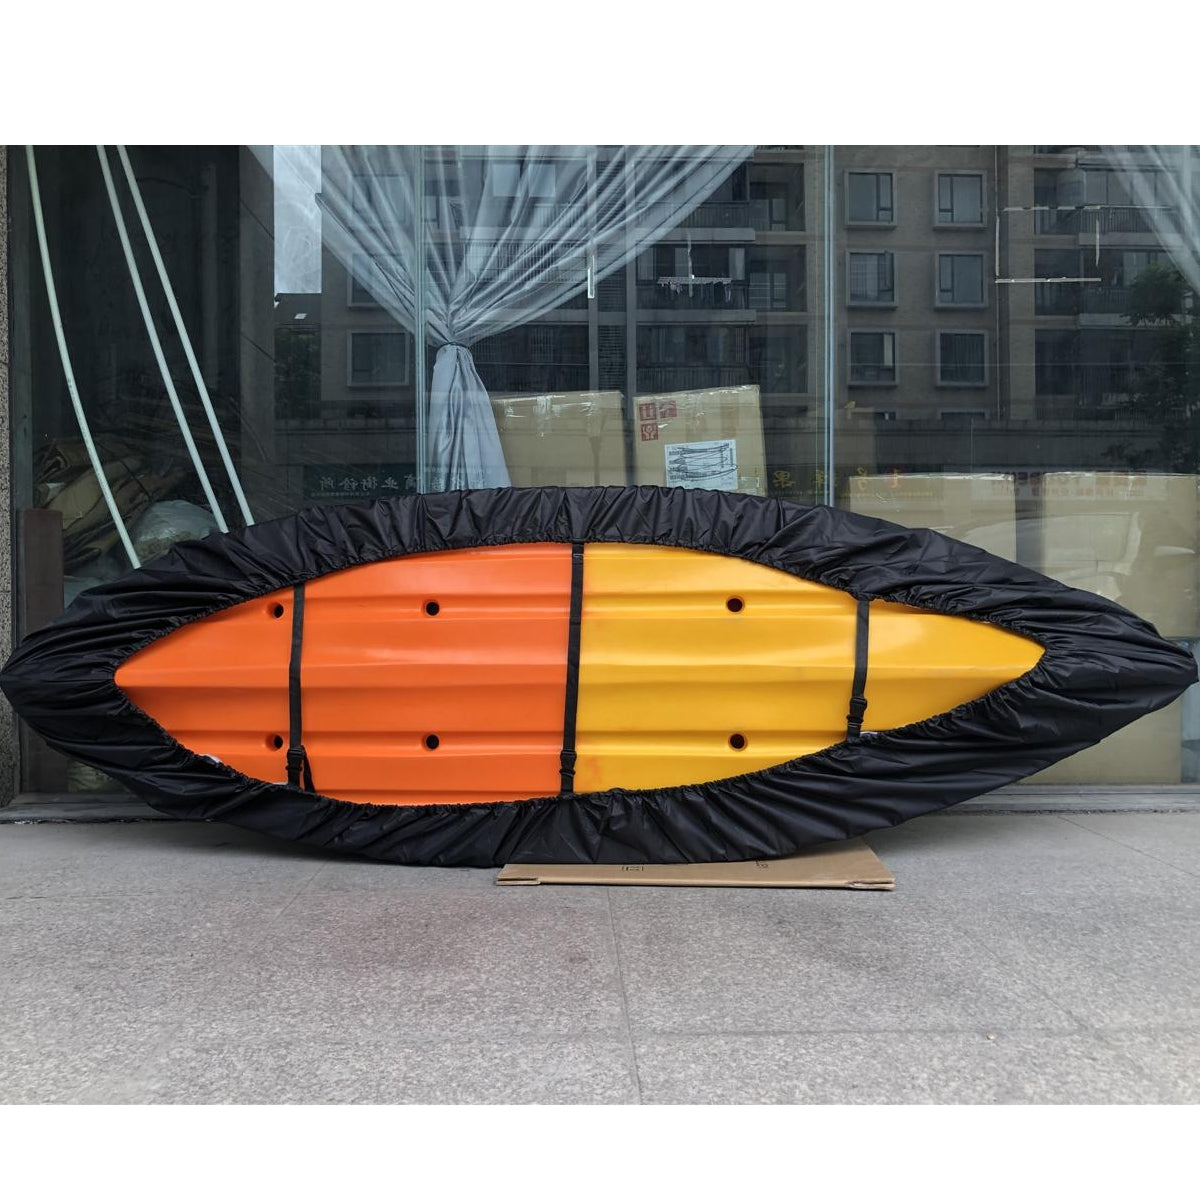 Goldenrod Kayak Cover with Adjustable Bottom Straps UV Resistant Dust Storage Shield Black For Hydra Creek